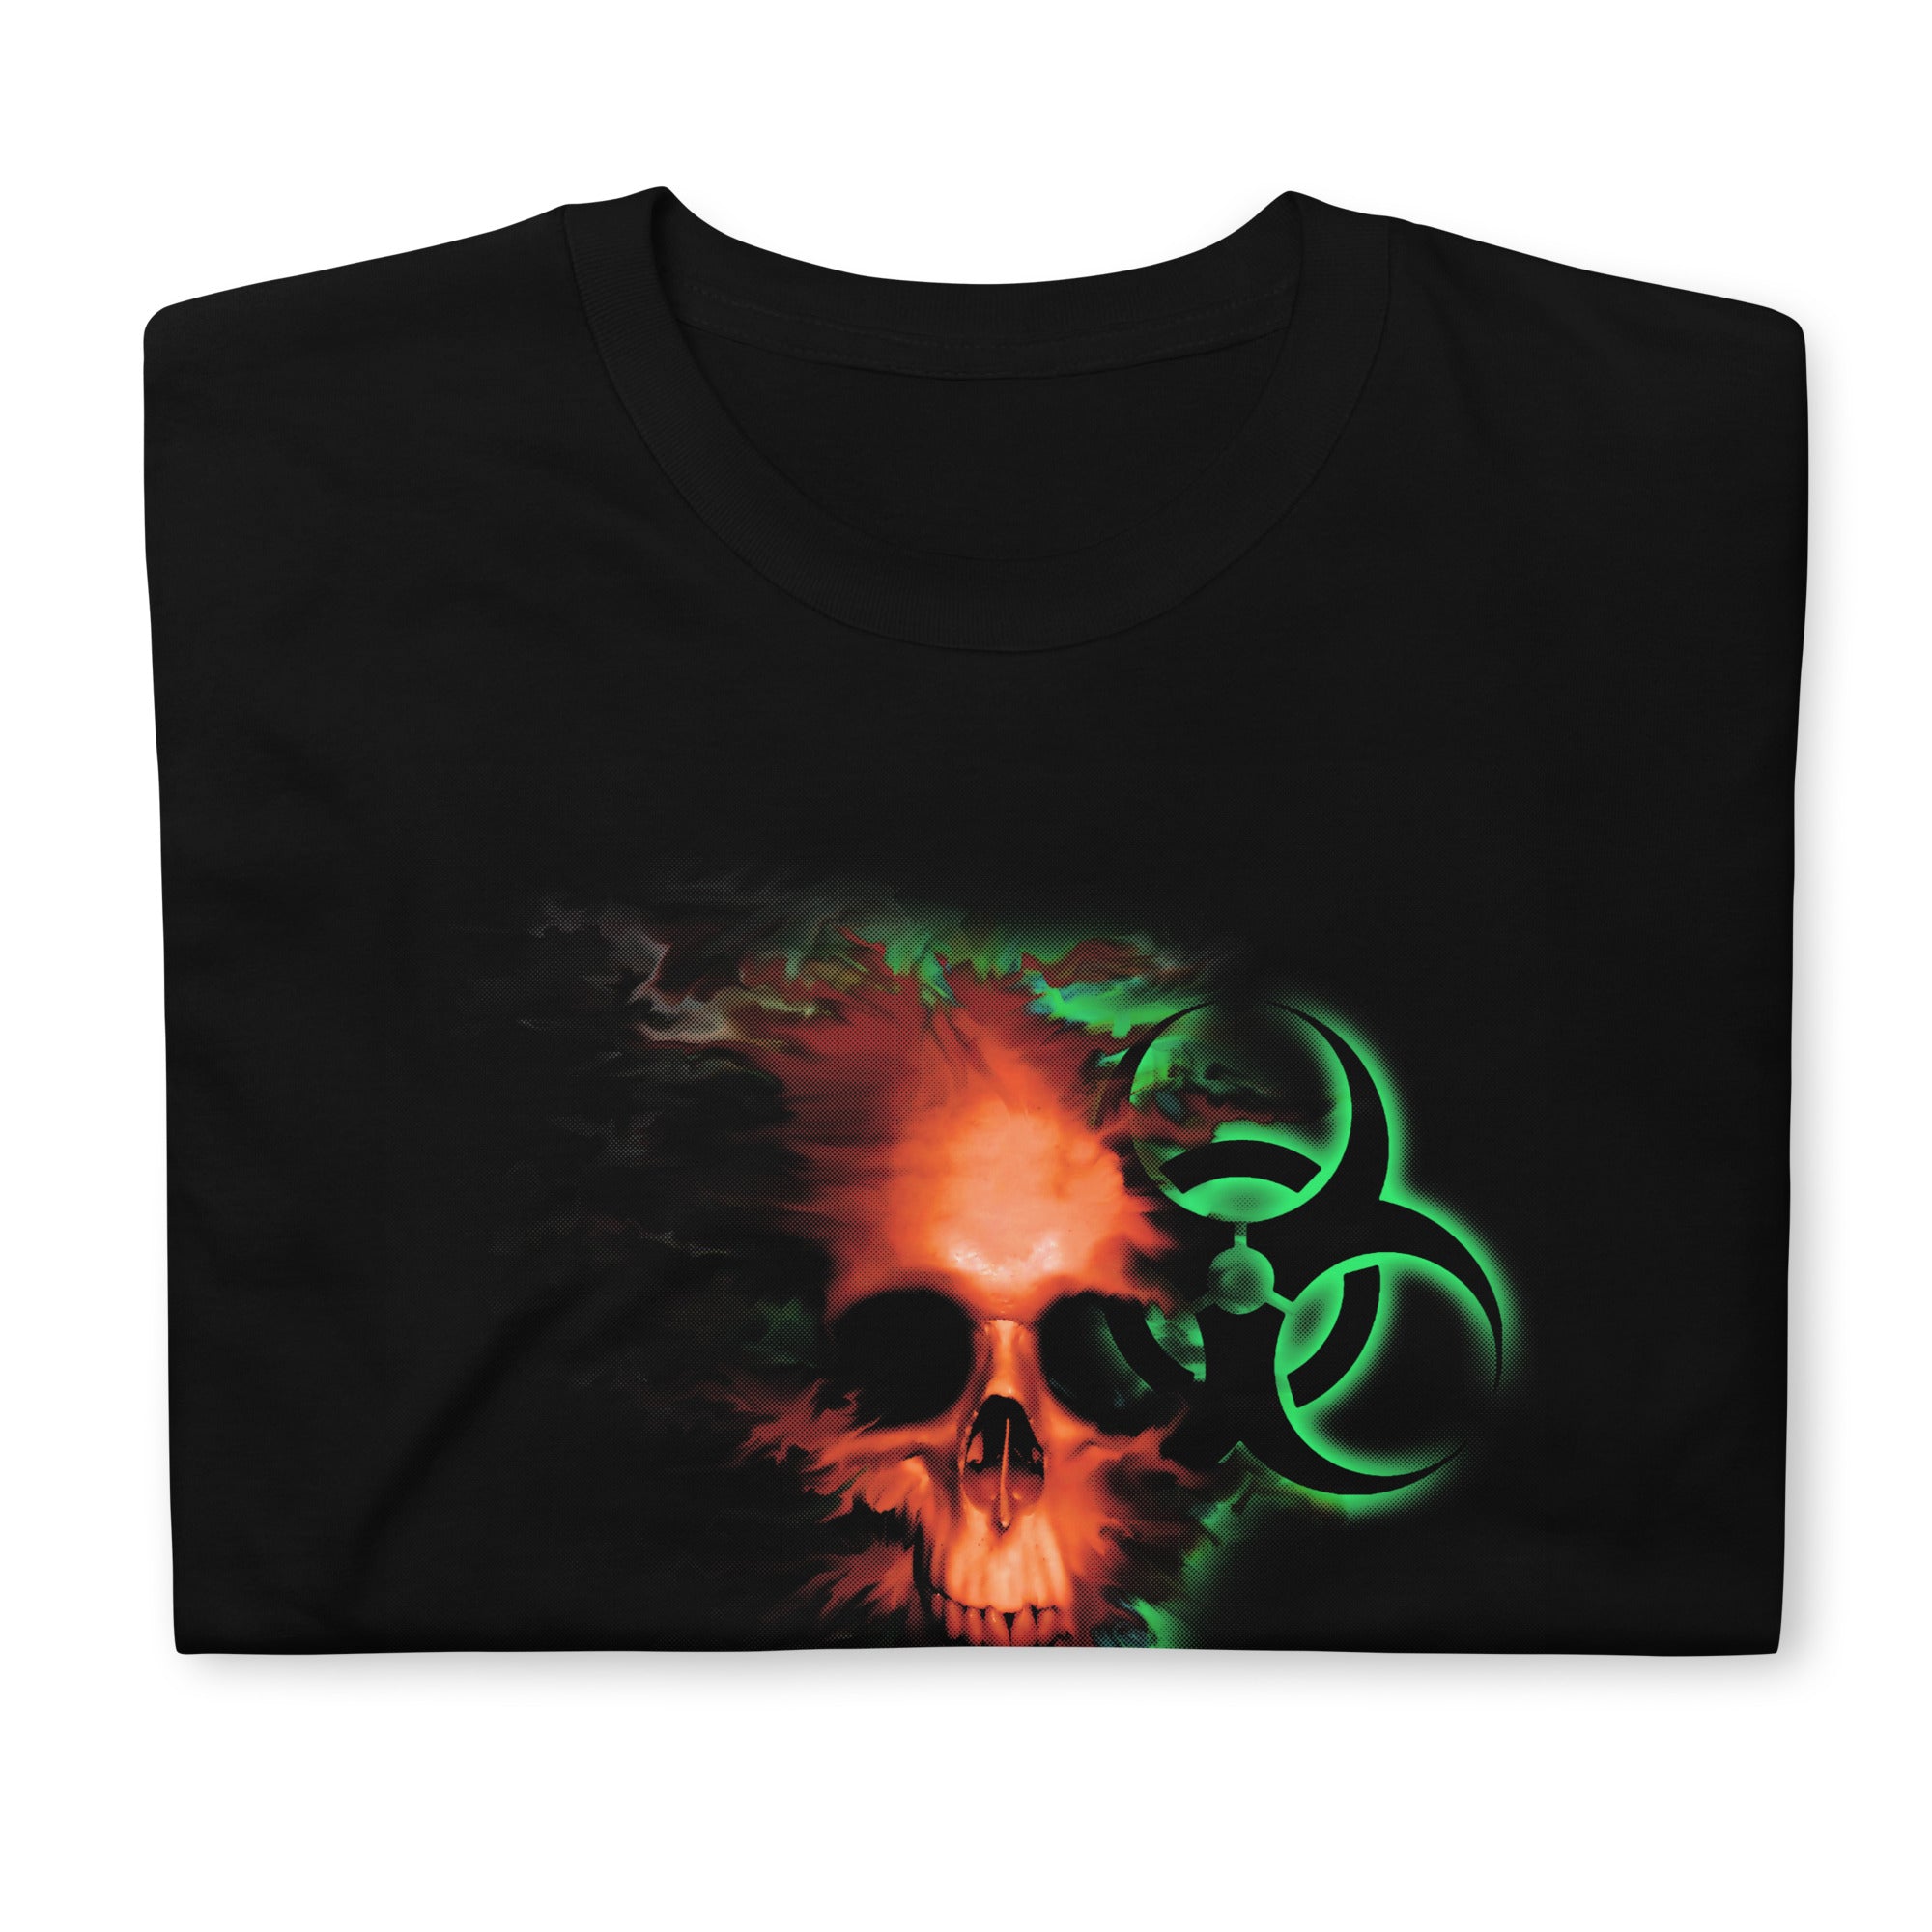 Radioactive Zombie Skull Bio Hazard Men's Short Sleeve T-Shirt - Edge of Life Designs